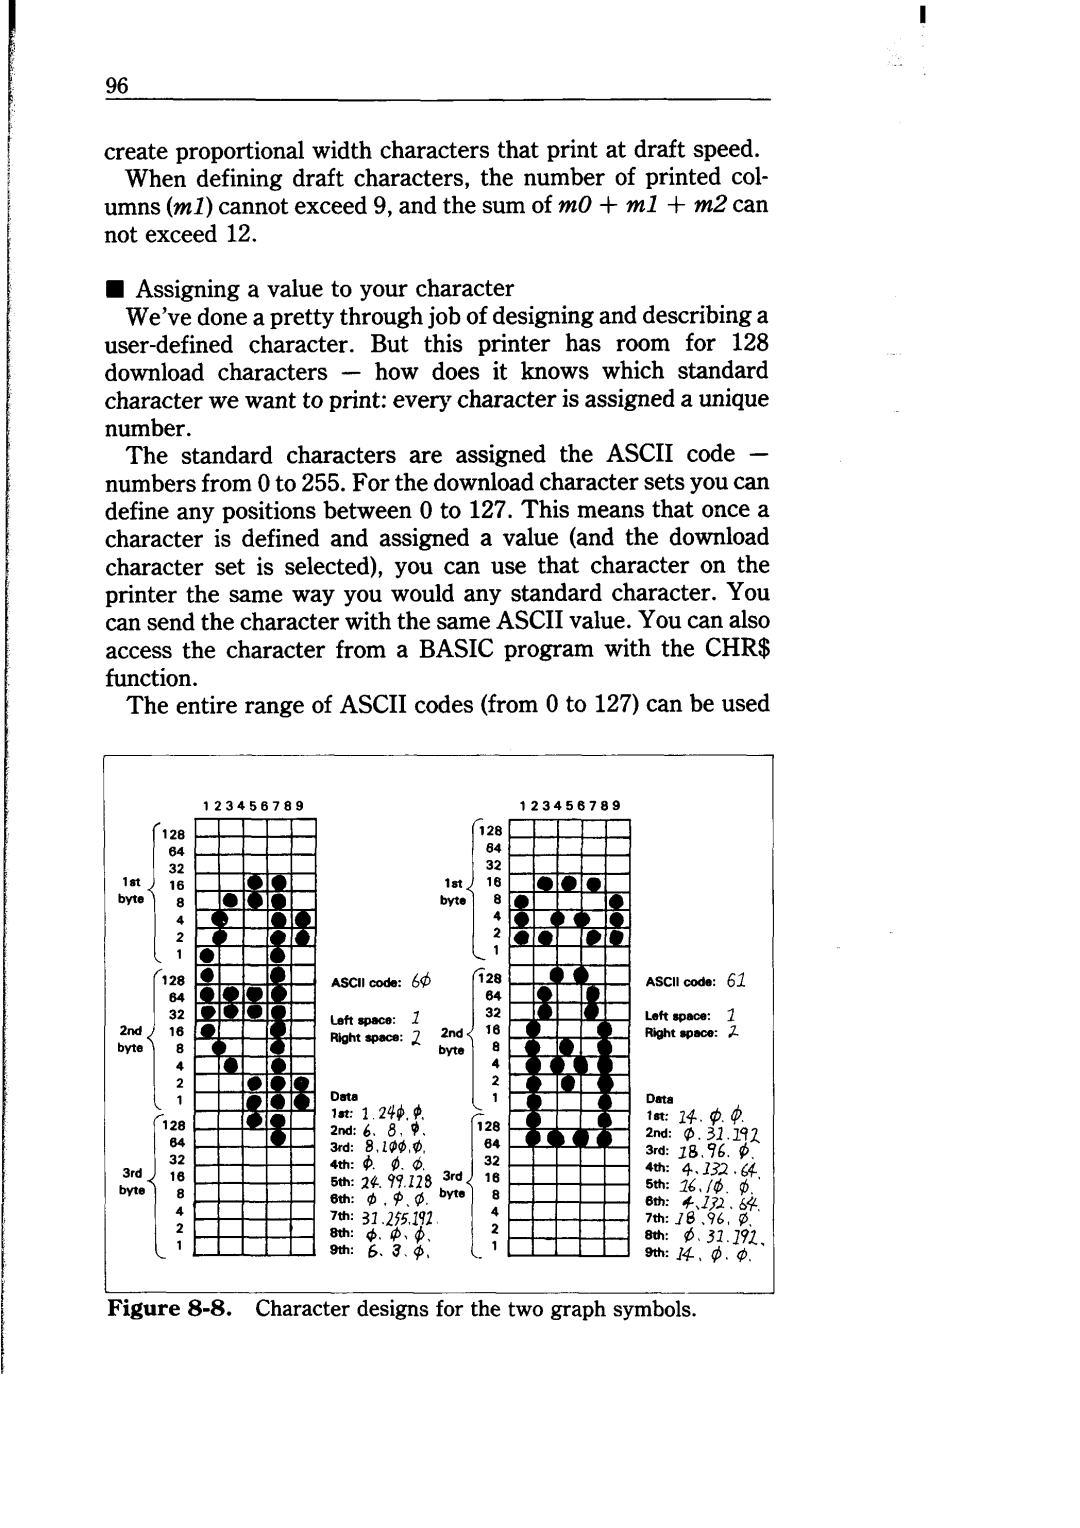 Star Micronics NB-15 user manual 8. Characterdesignsforthetwographsymbols 